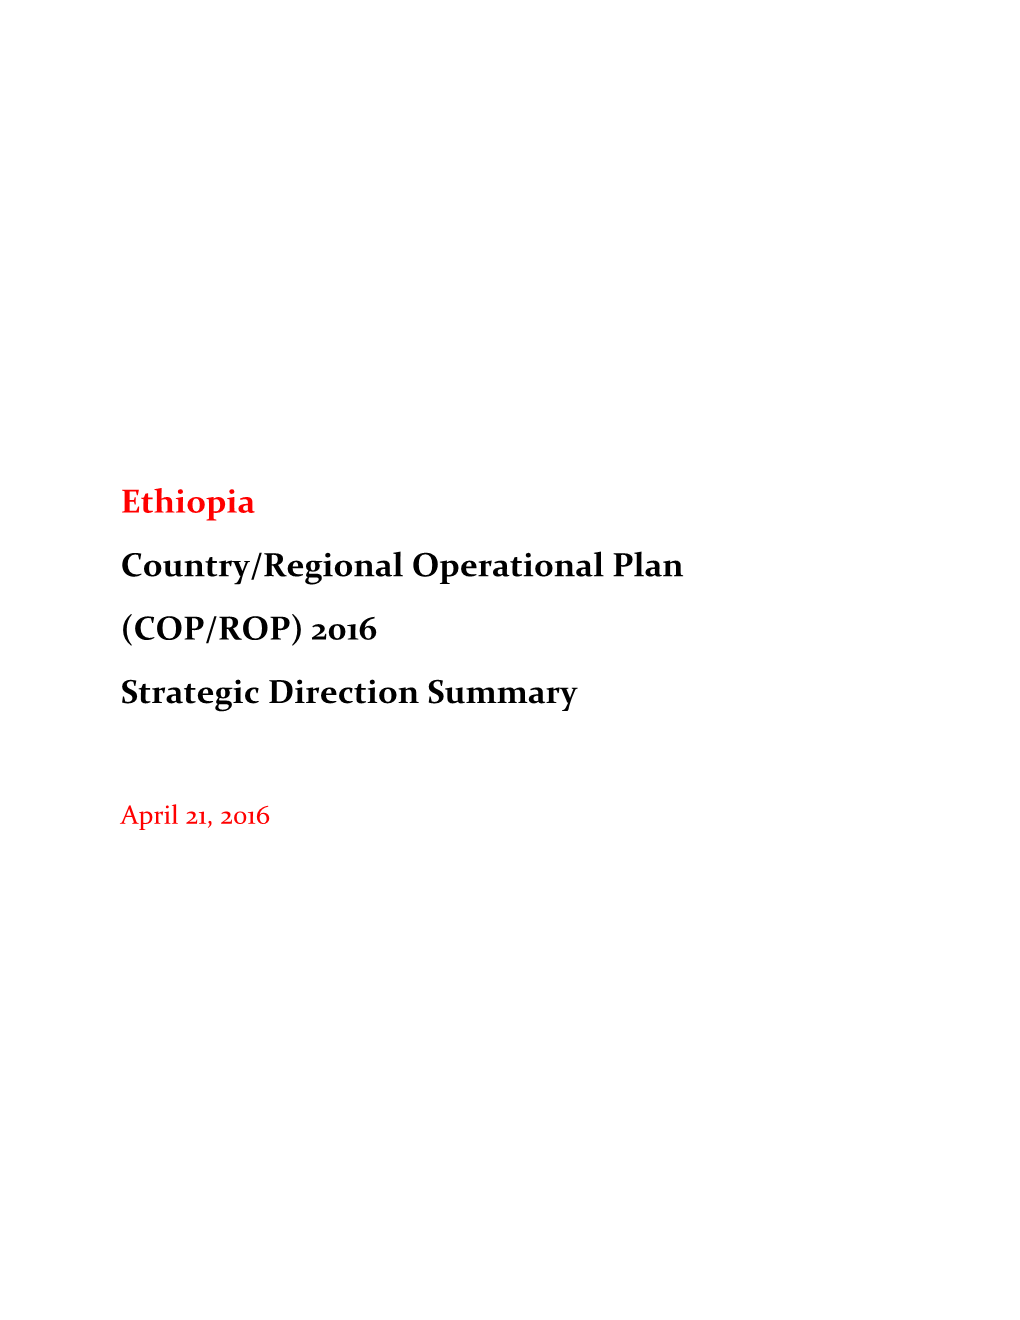 Ethiopia Country/Regional Operational Plan (COP/ROP) 2016 Strategic Direction Summary